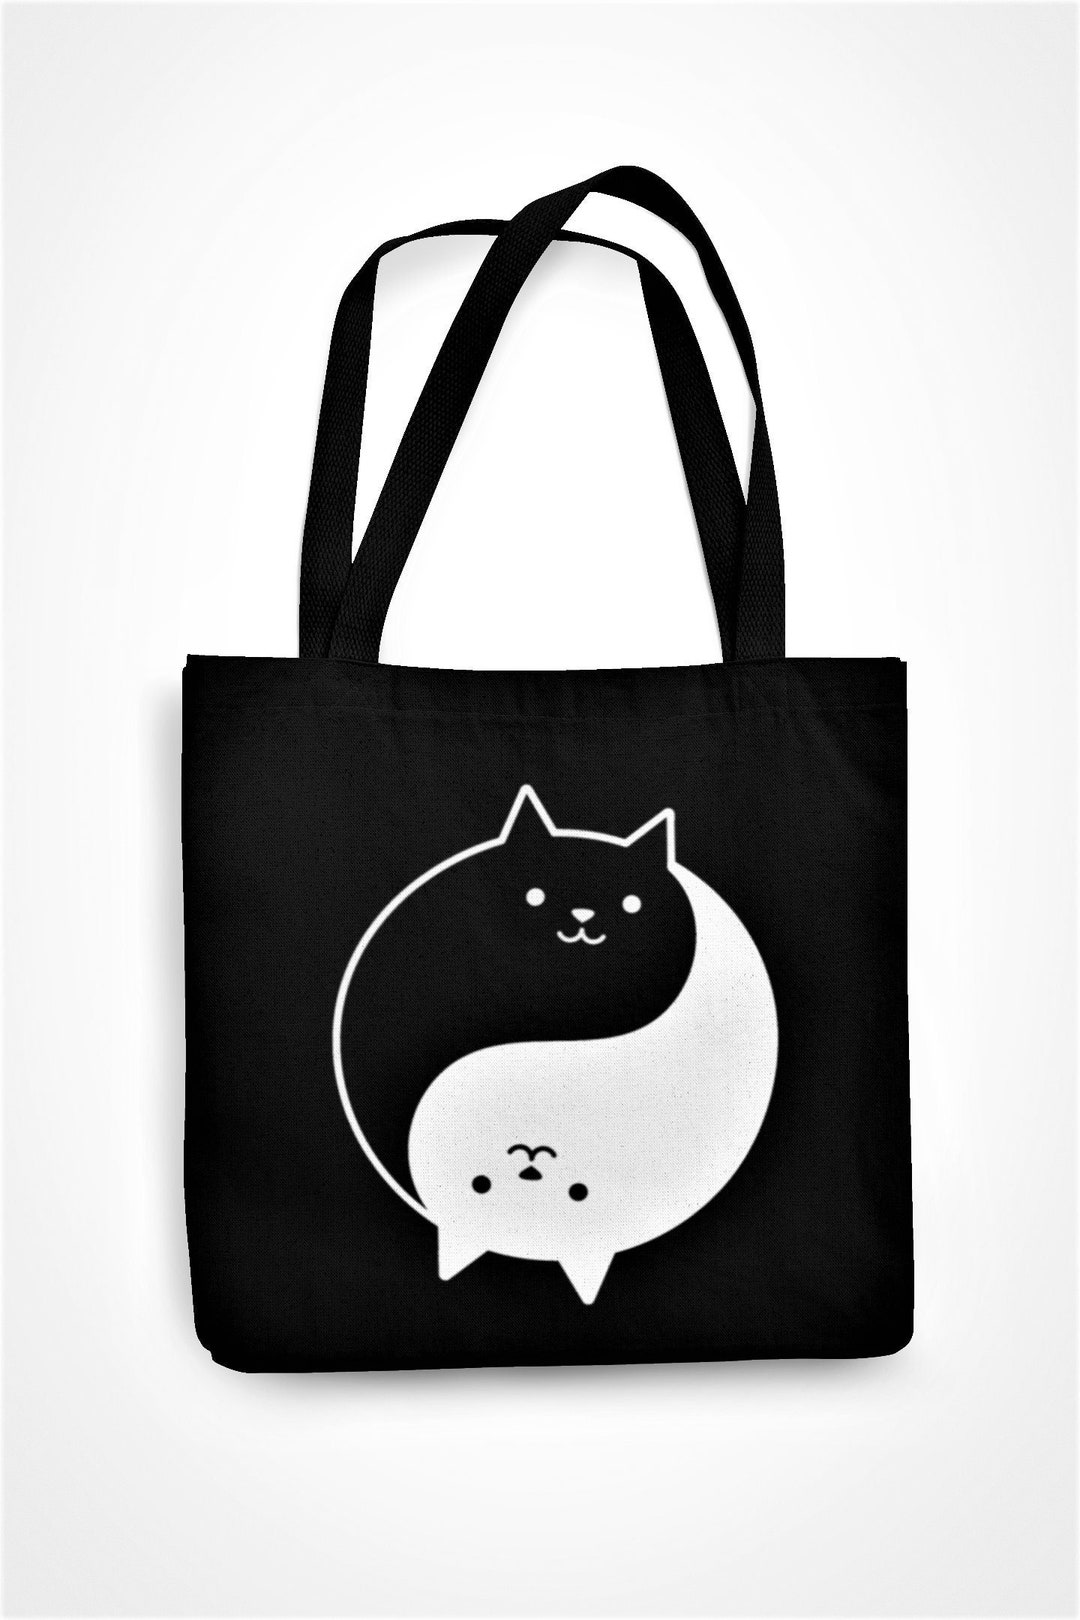 Ying Yang Kittens Tote Bag Cute Kittens Spiritual Zen Peace - Etsy UK